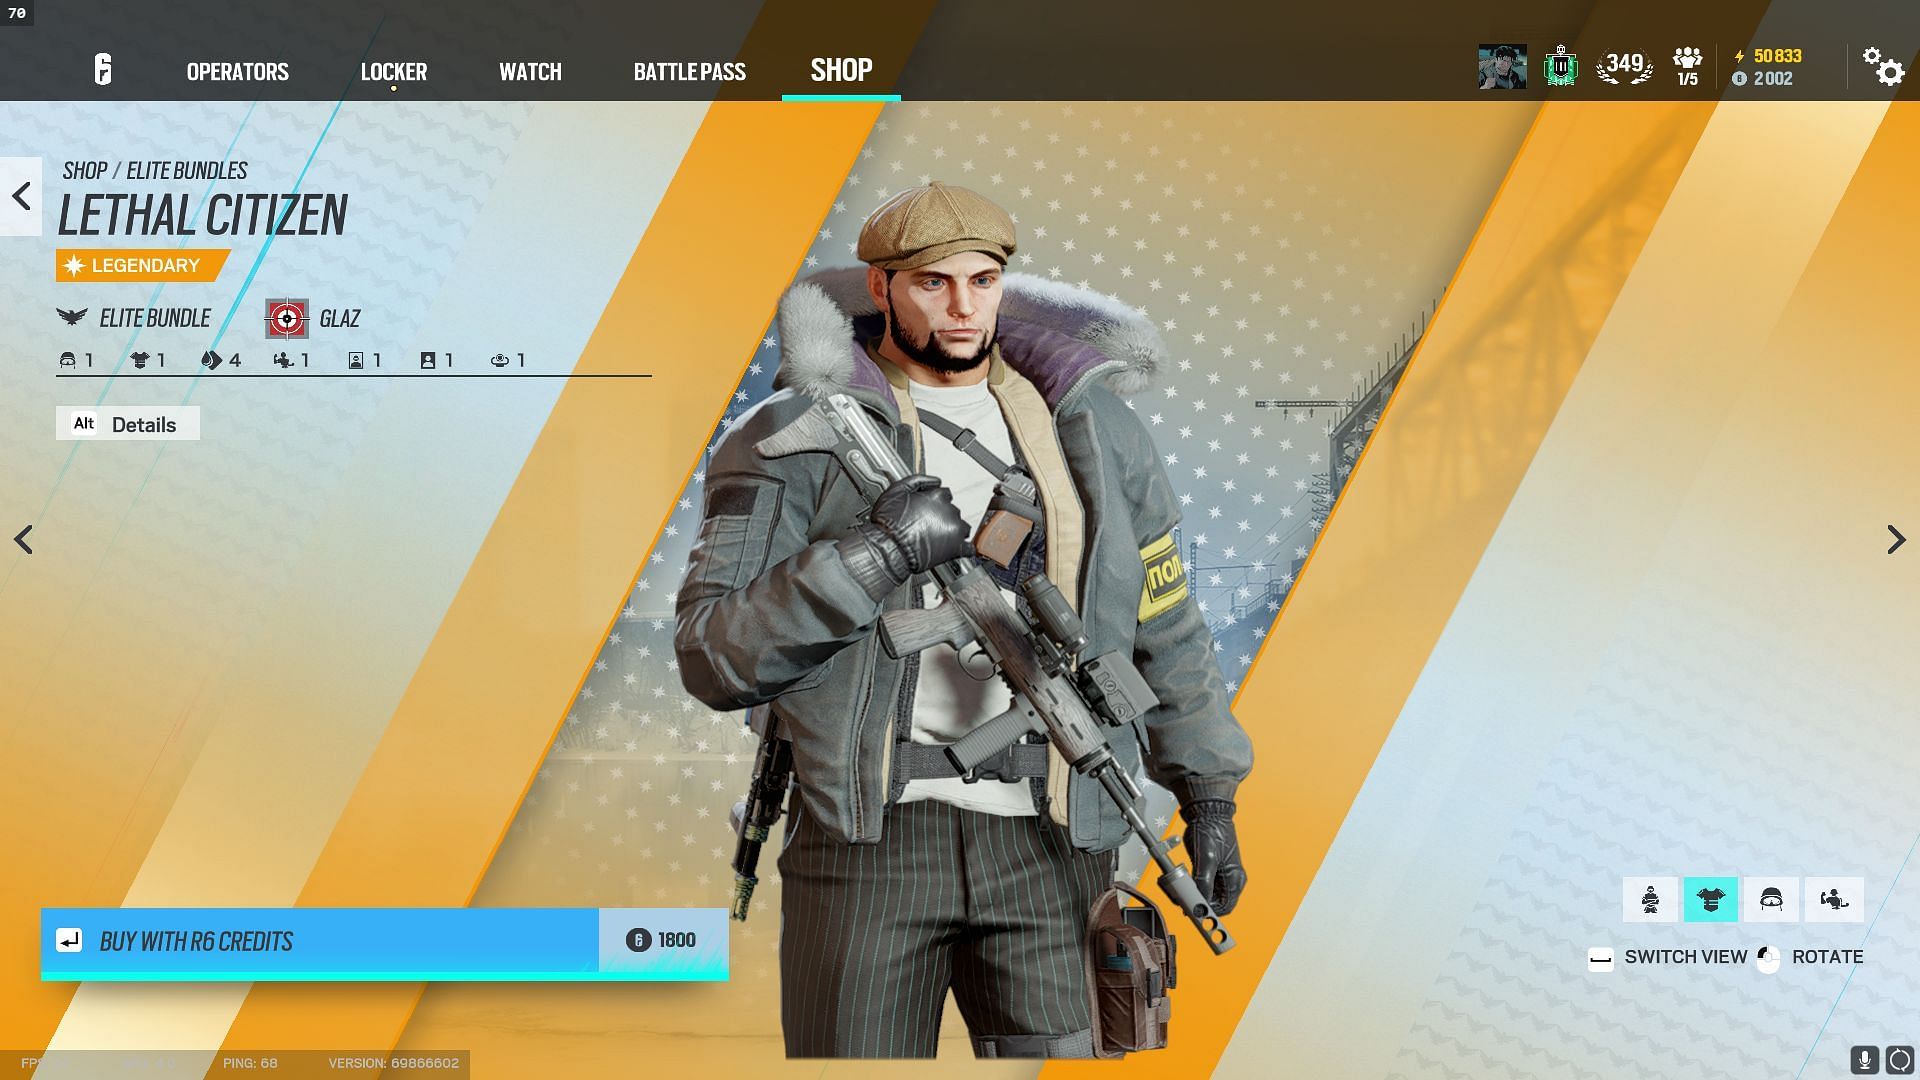 Glaz Elite skin from the game (Image via Ubisoft)